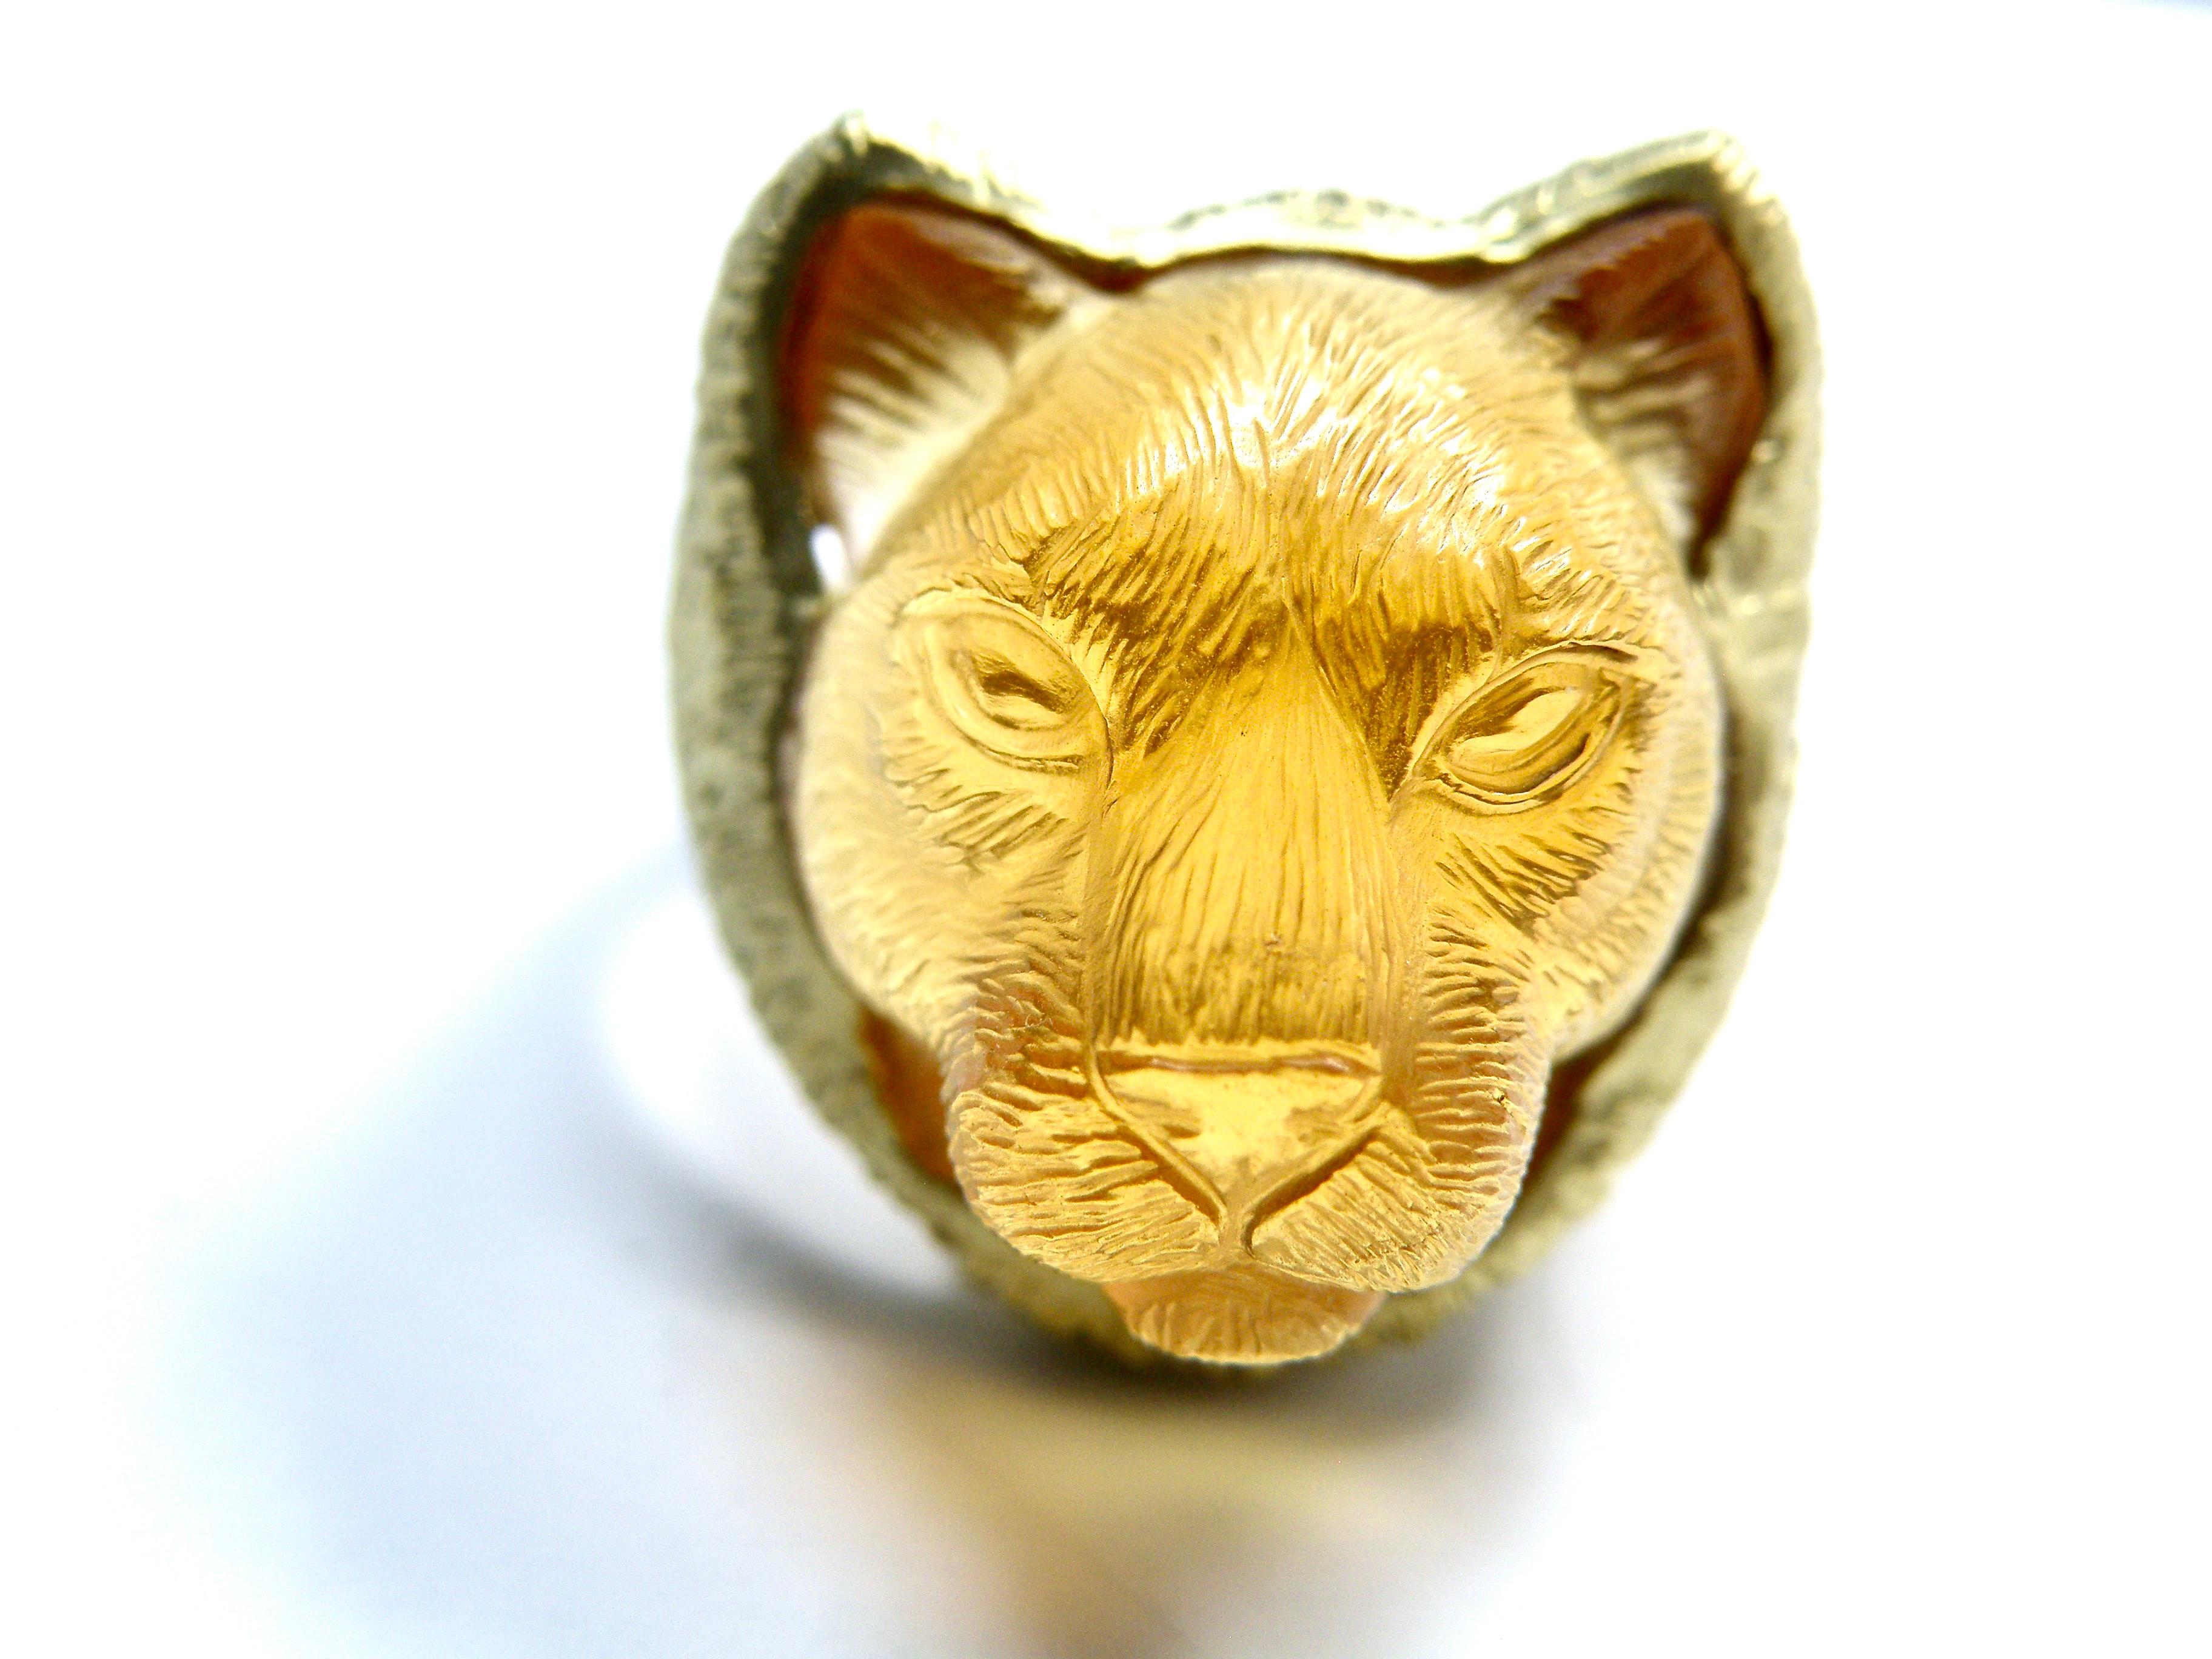 18K gold Citrine lionshead unisex ring carved by master Idar Obesteincarver.
stone3/4